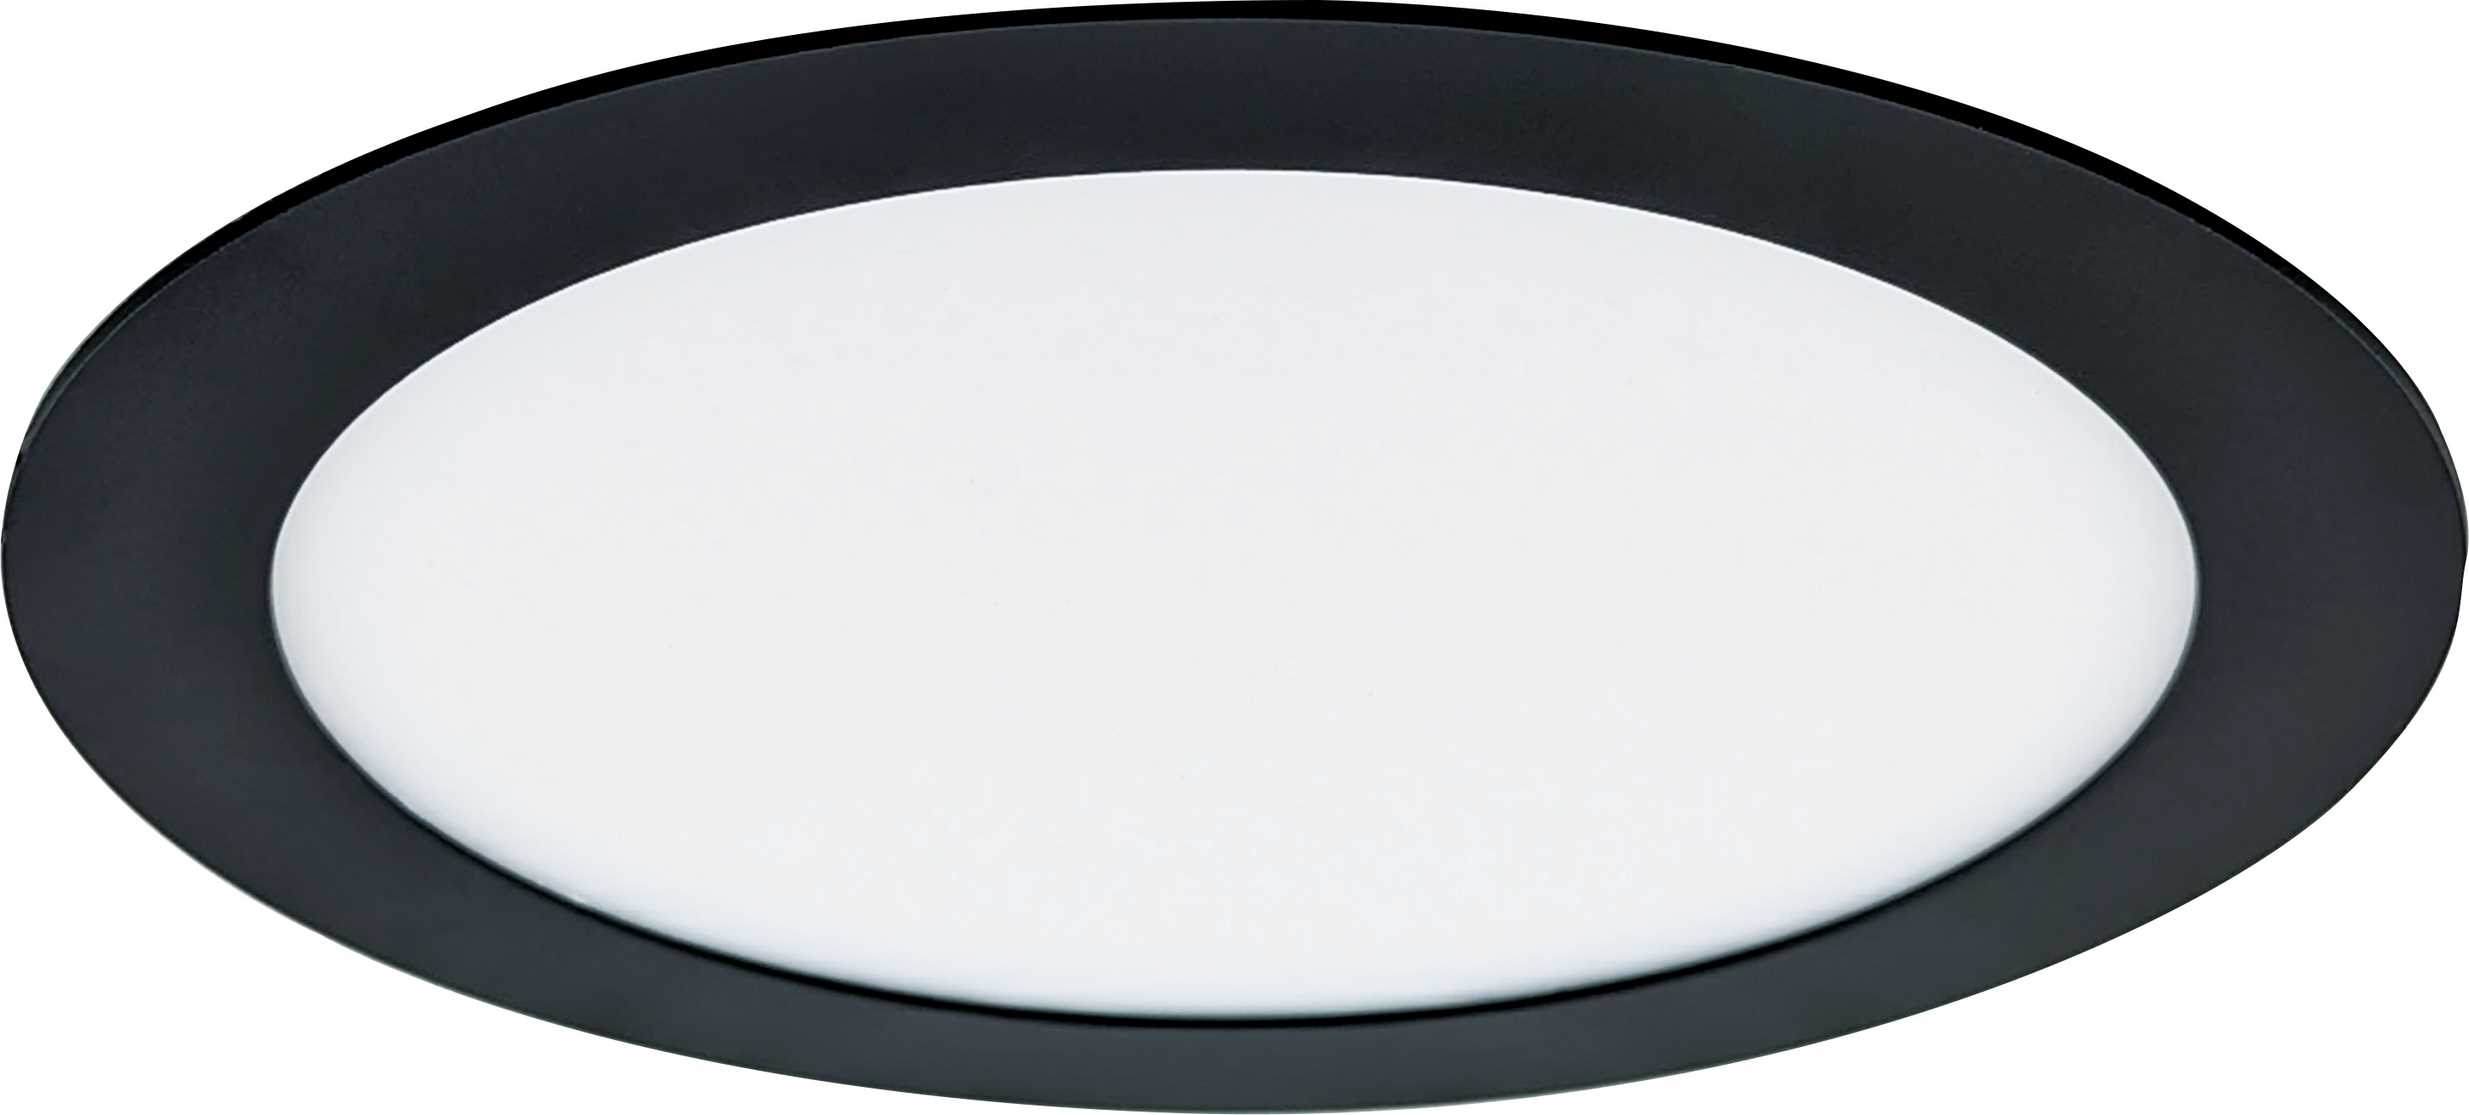 LED vestavné svítidlo LED90 VEGA-R Black 18W NW, 3800K, 1350lm, IP44/20, Greenlux GXDW358 - zvìtšit obrázek